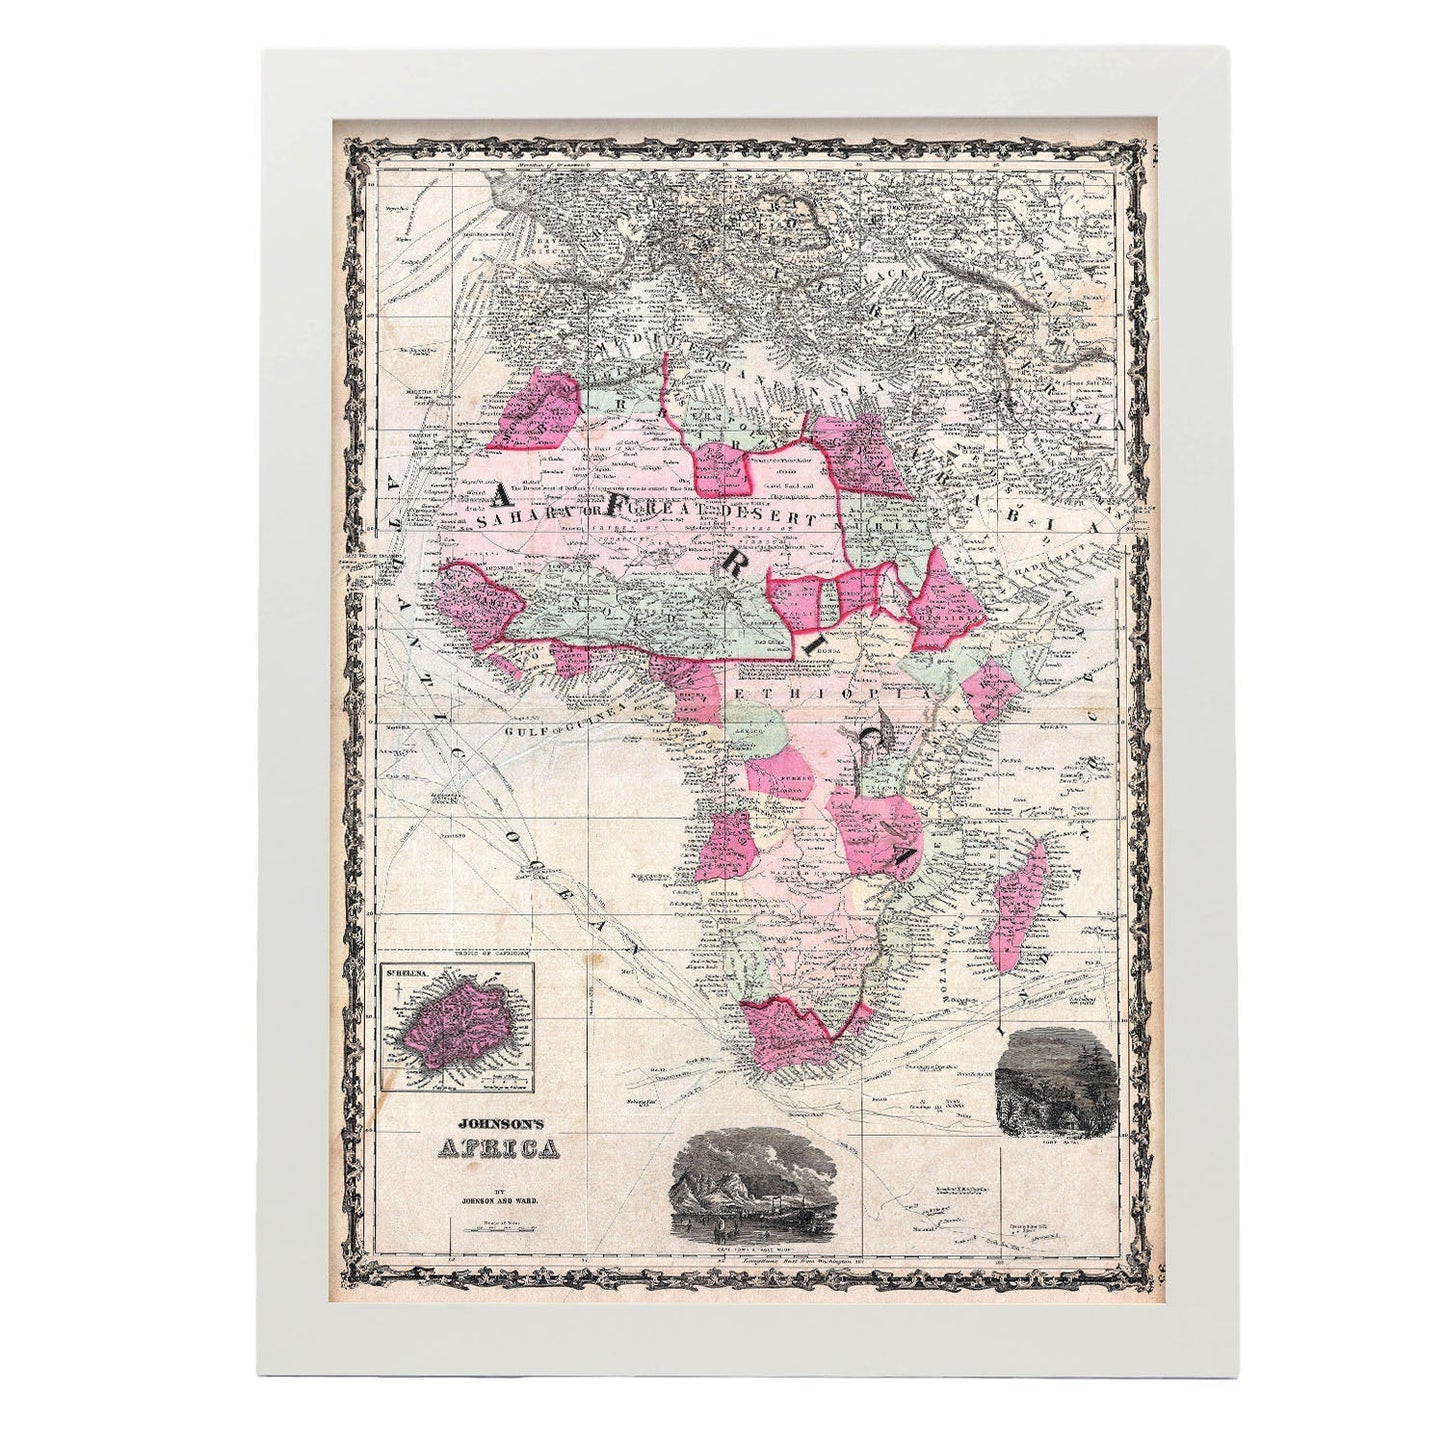 1862 Johnson Map of Africa Geographicus Afria johnson 1862-Artwork-Nacnic-A3-Marco Blanco-Nacnic Estudio SL